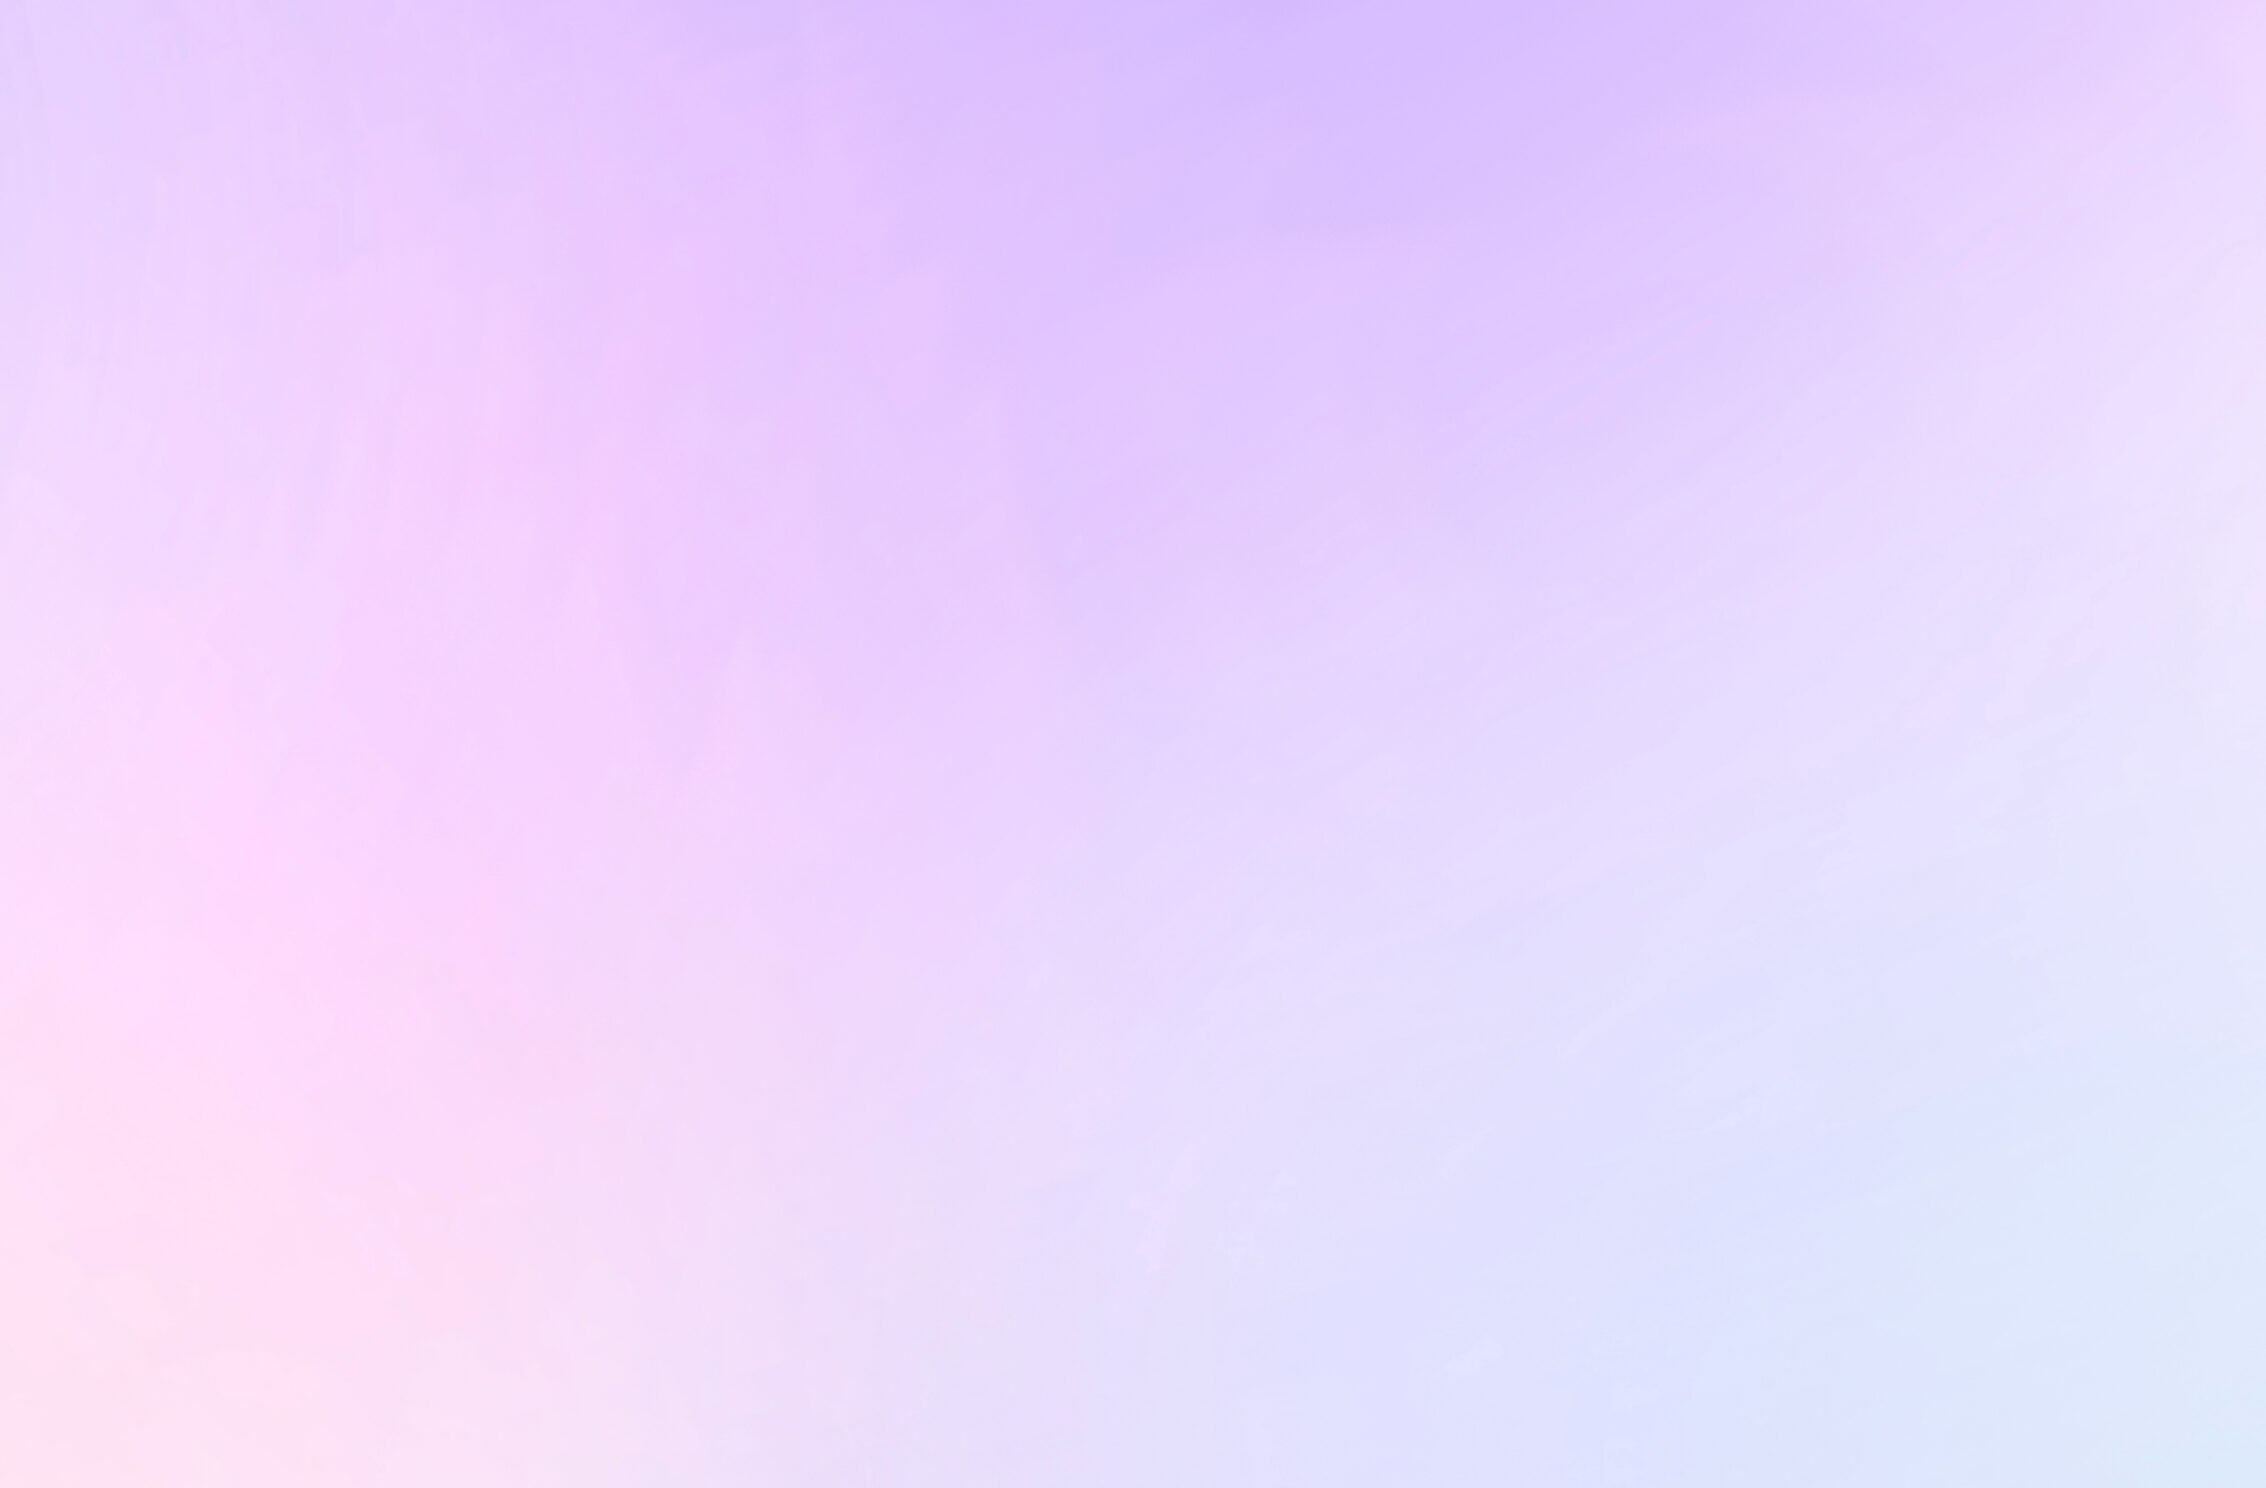 https://www.ipadwallpaper.org/wp-content/uploads/2021/02/Purple-light-pink-gradient-background-iPad-wallpaper-2266x1488.jpg